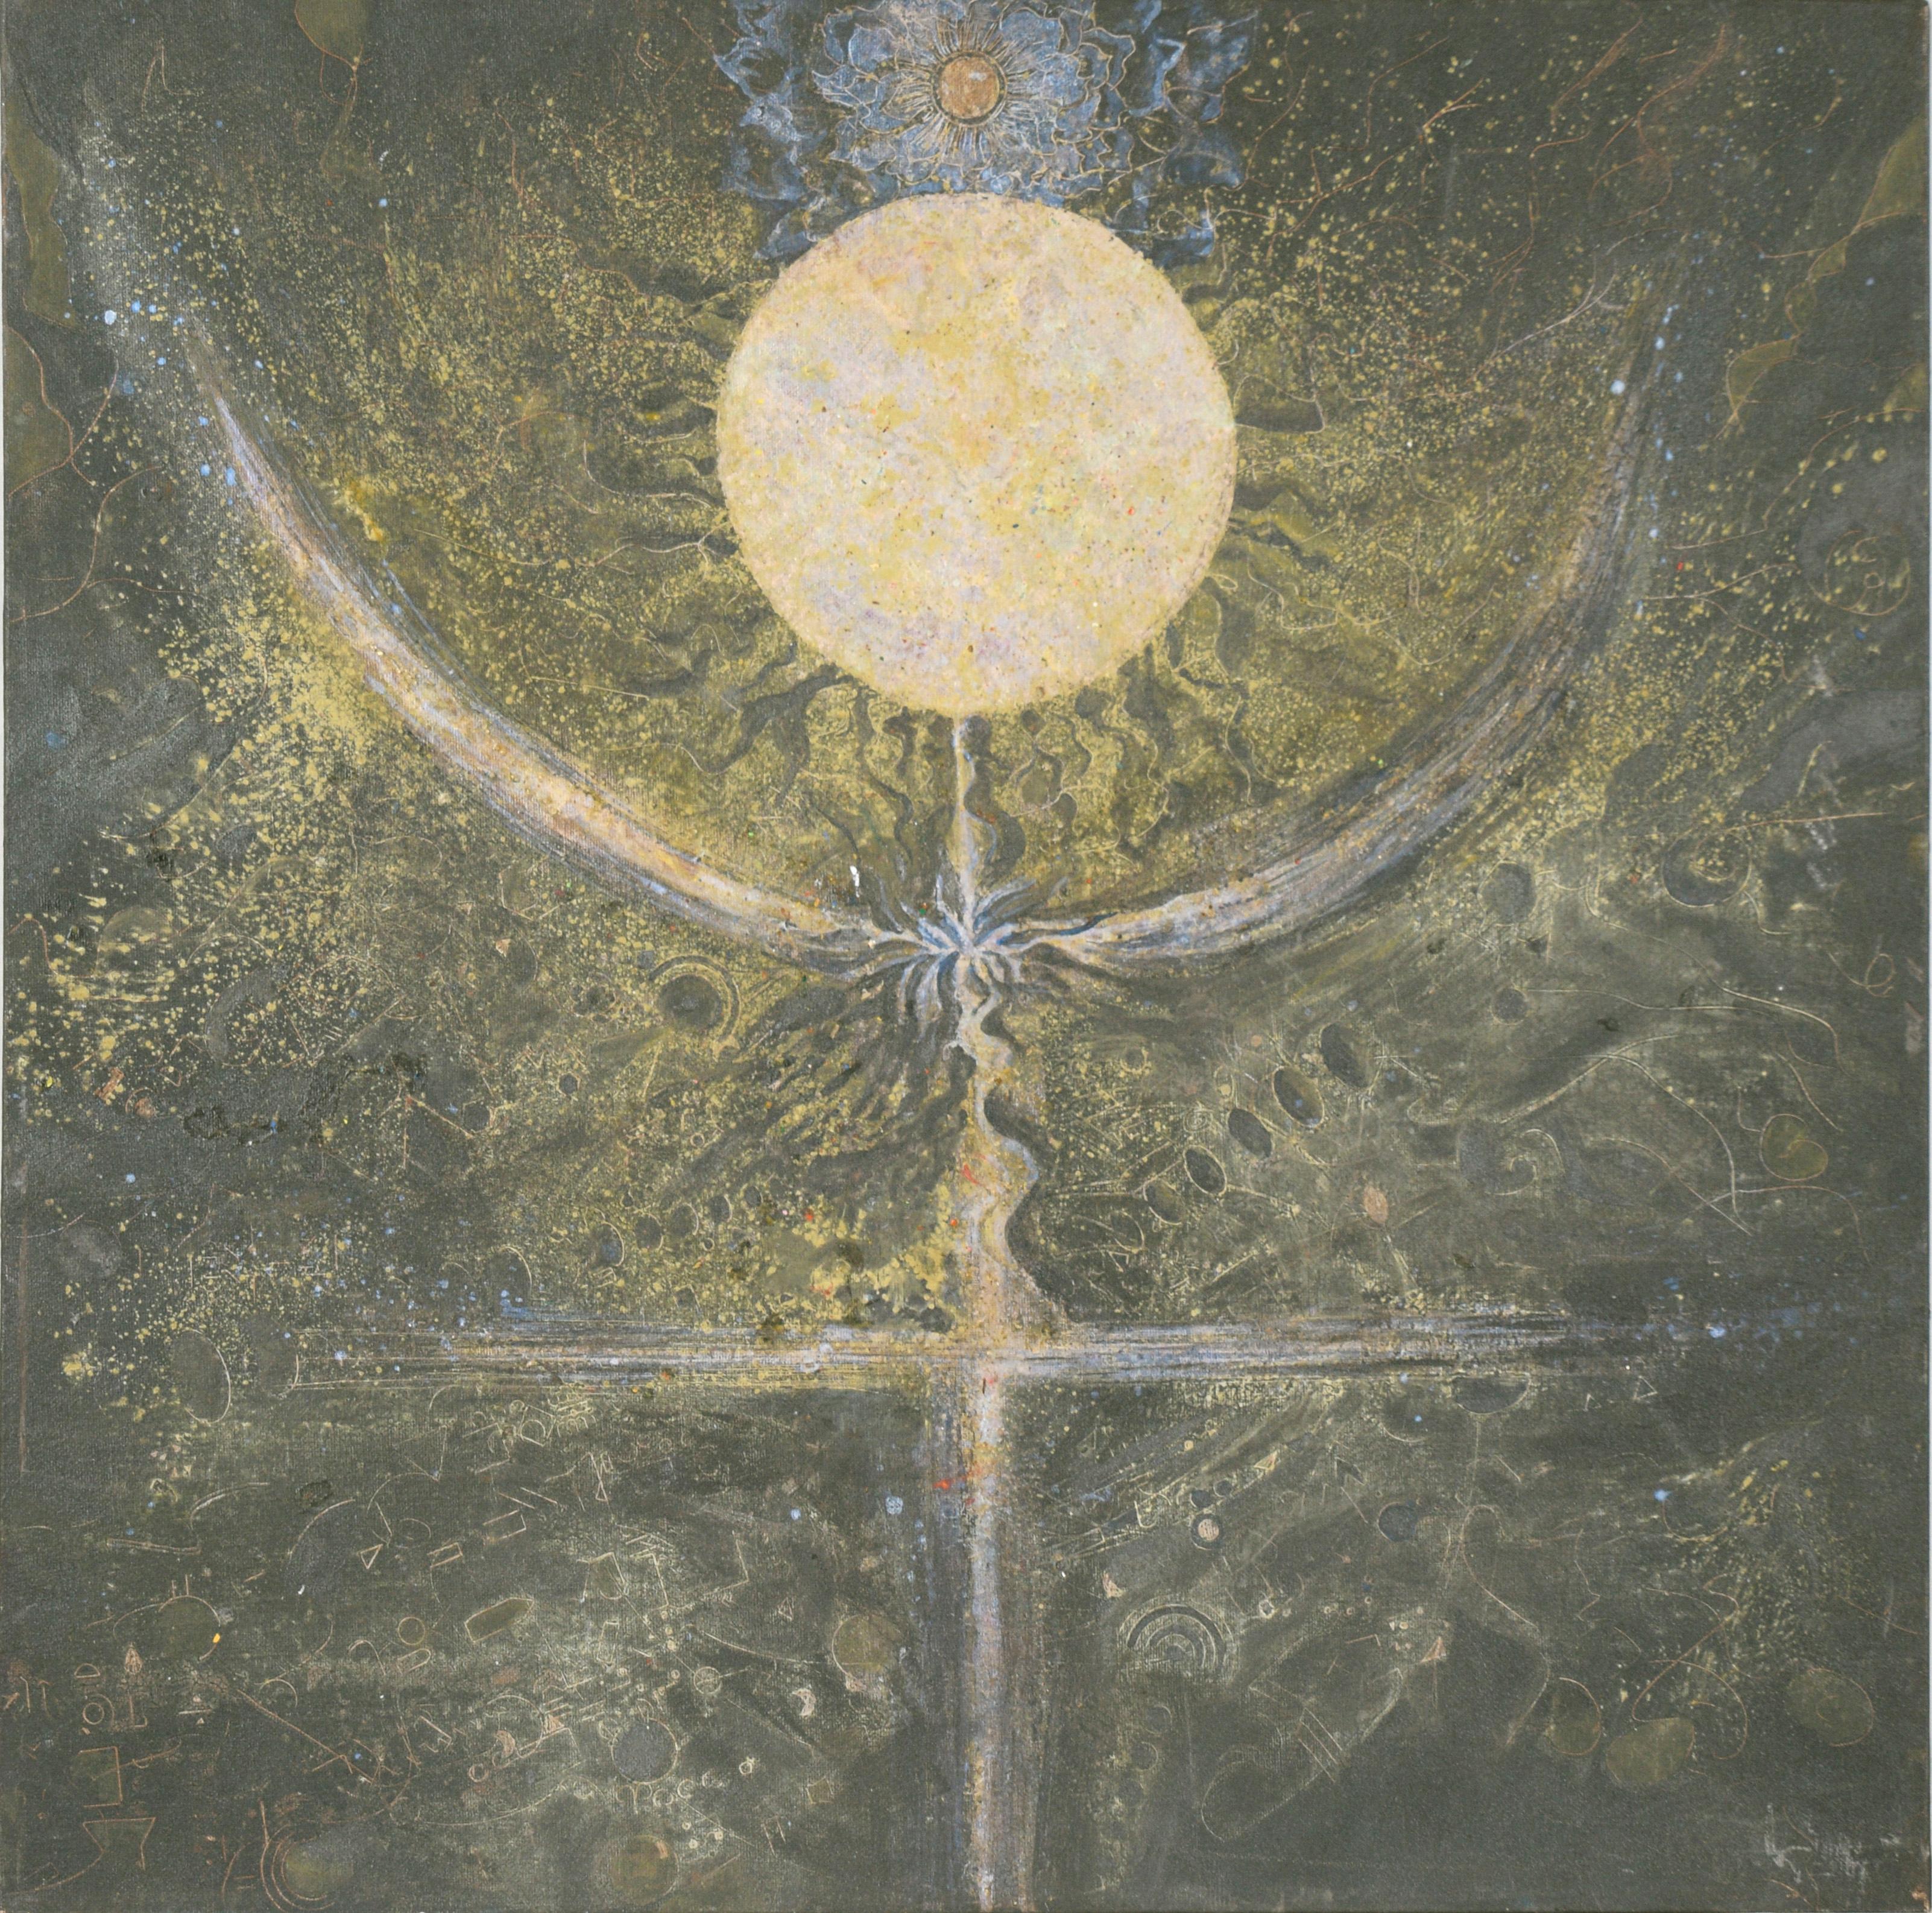 Dana Lynn Andersen Abstract Painting - "Plutonium Messenger" Symbolic Visionary Art in Acrylic on Canvas